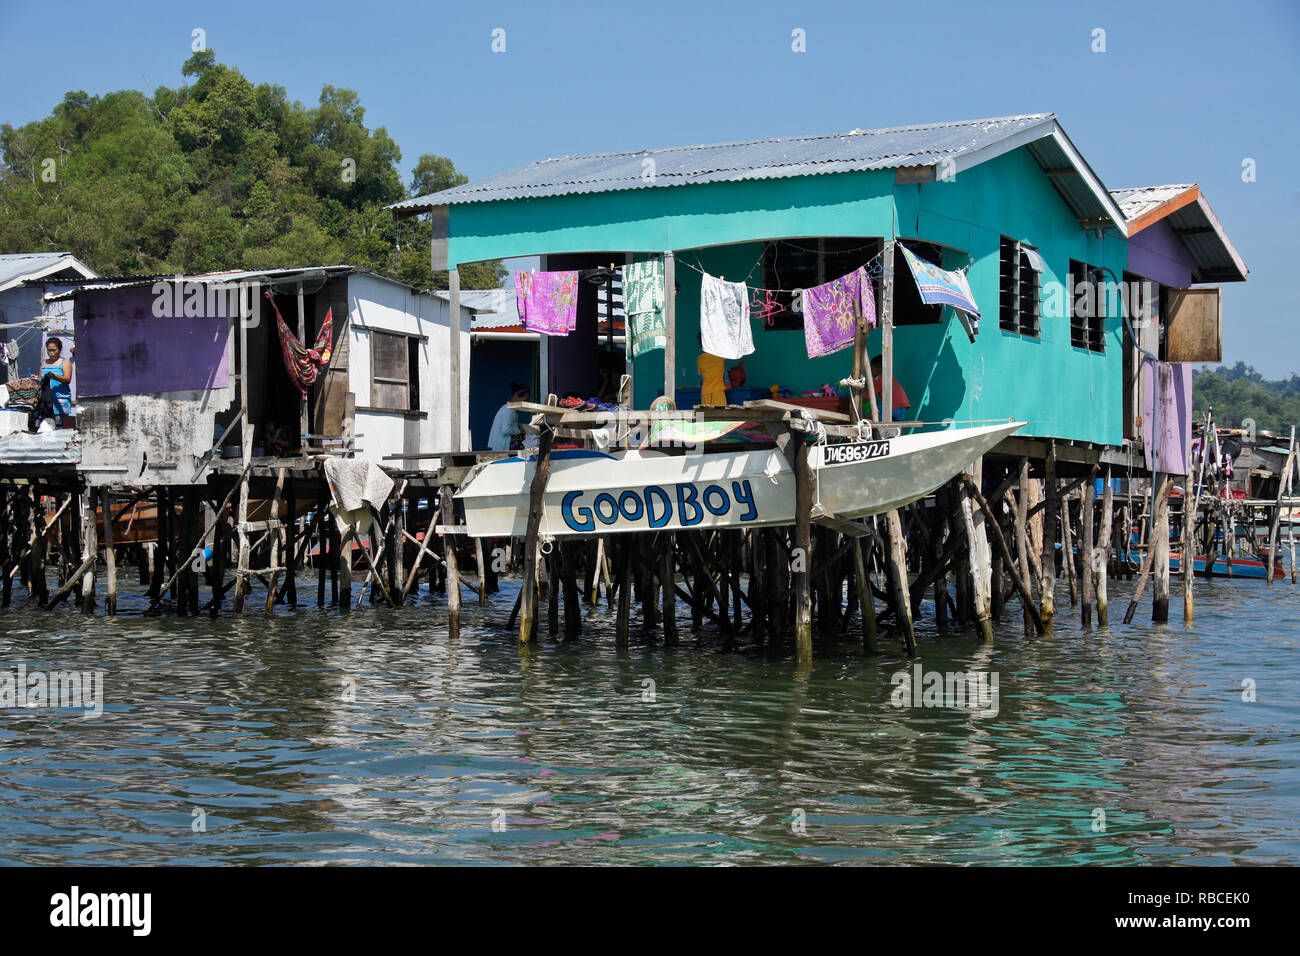 Dwellings built on stilts in South China Sea near Kota Kinabalu, Sabah (Borneo), Malaysia Stock Photo